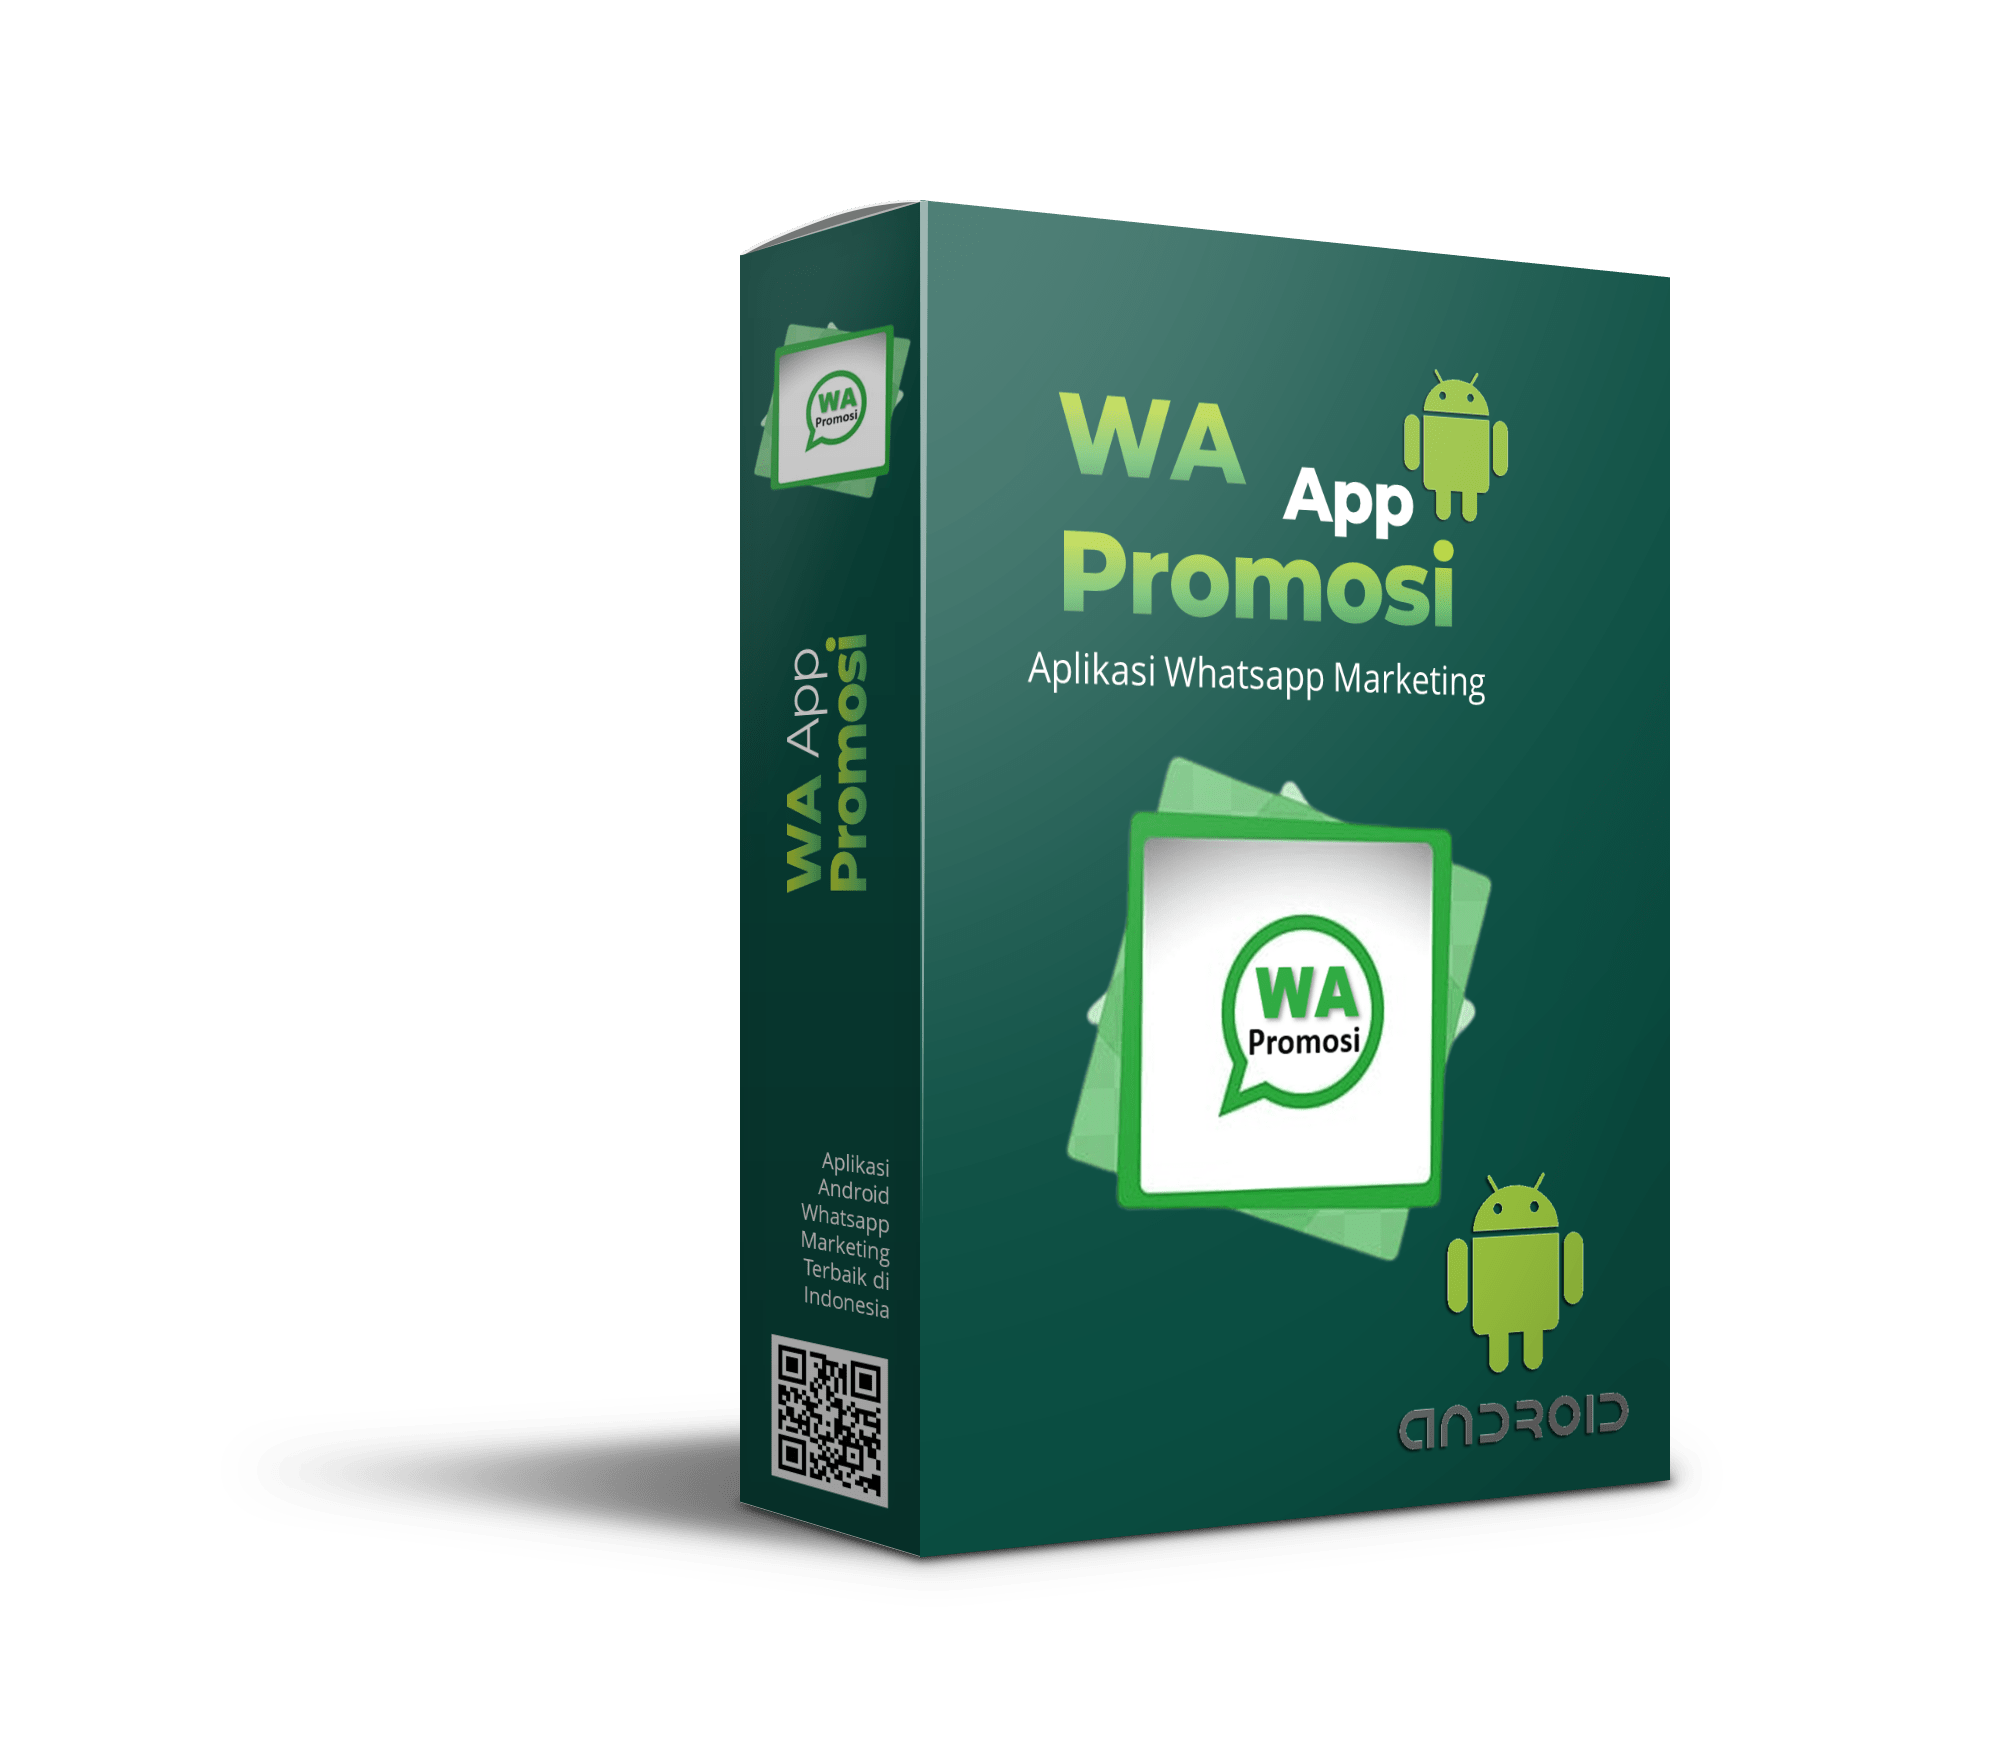 Whatsapp promosi app android